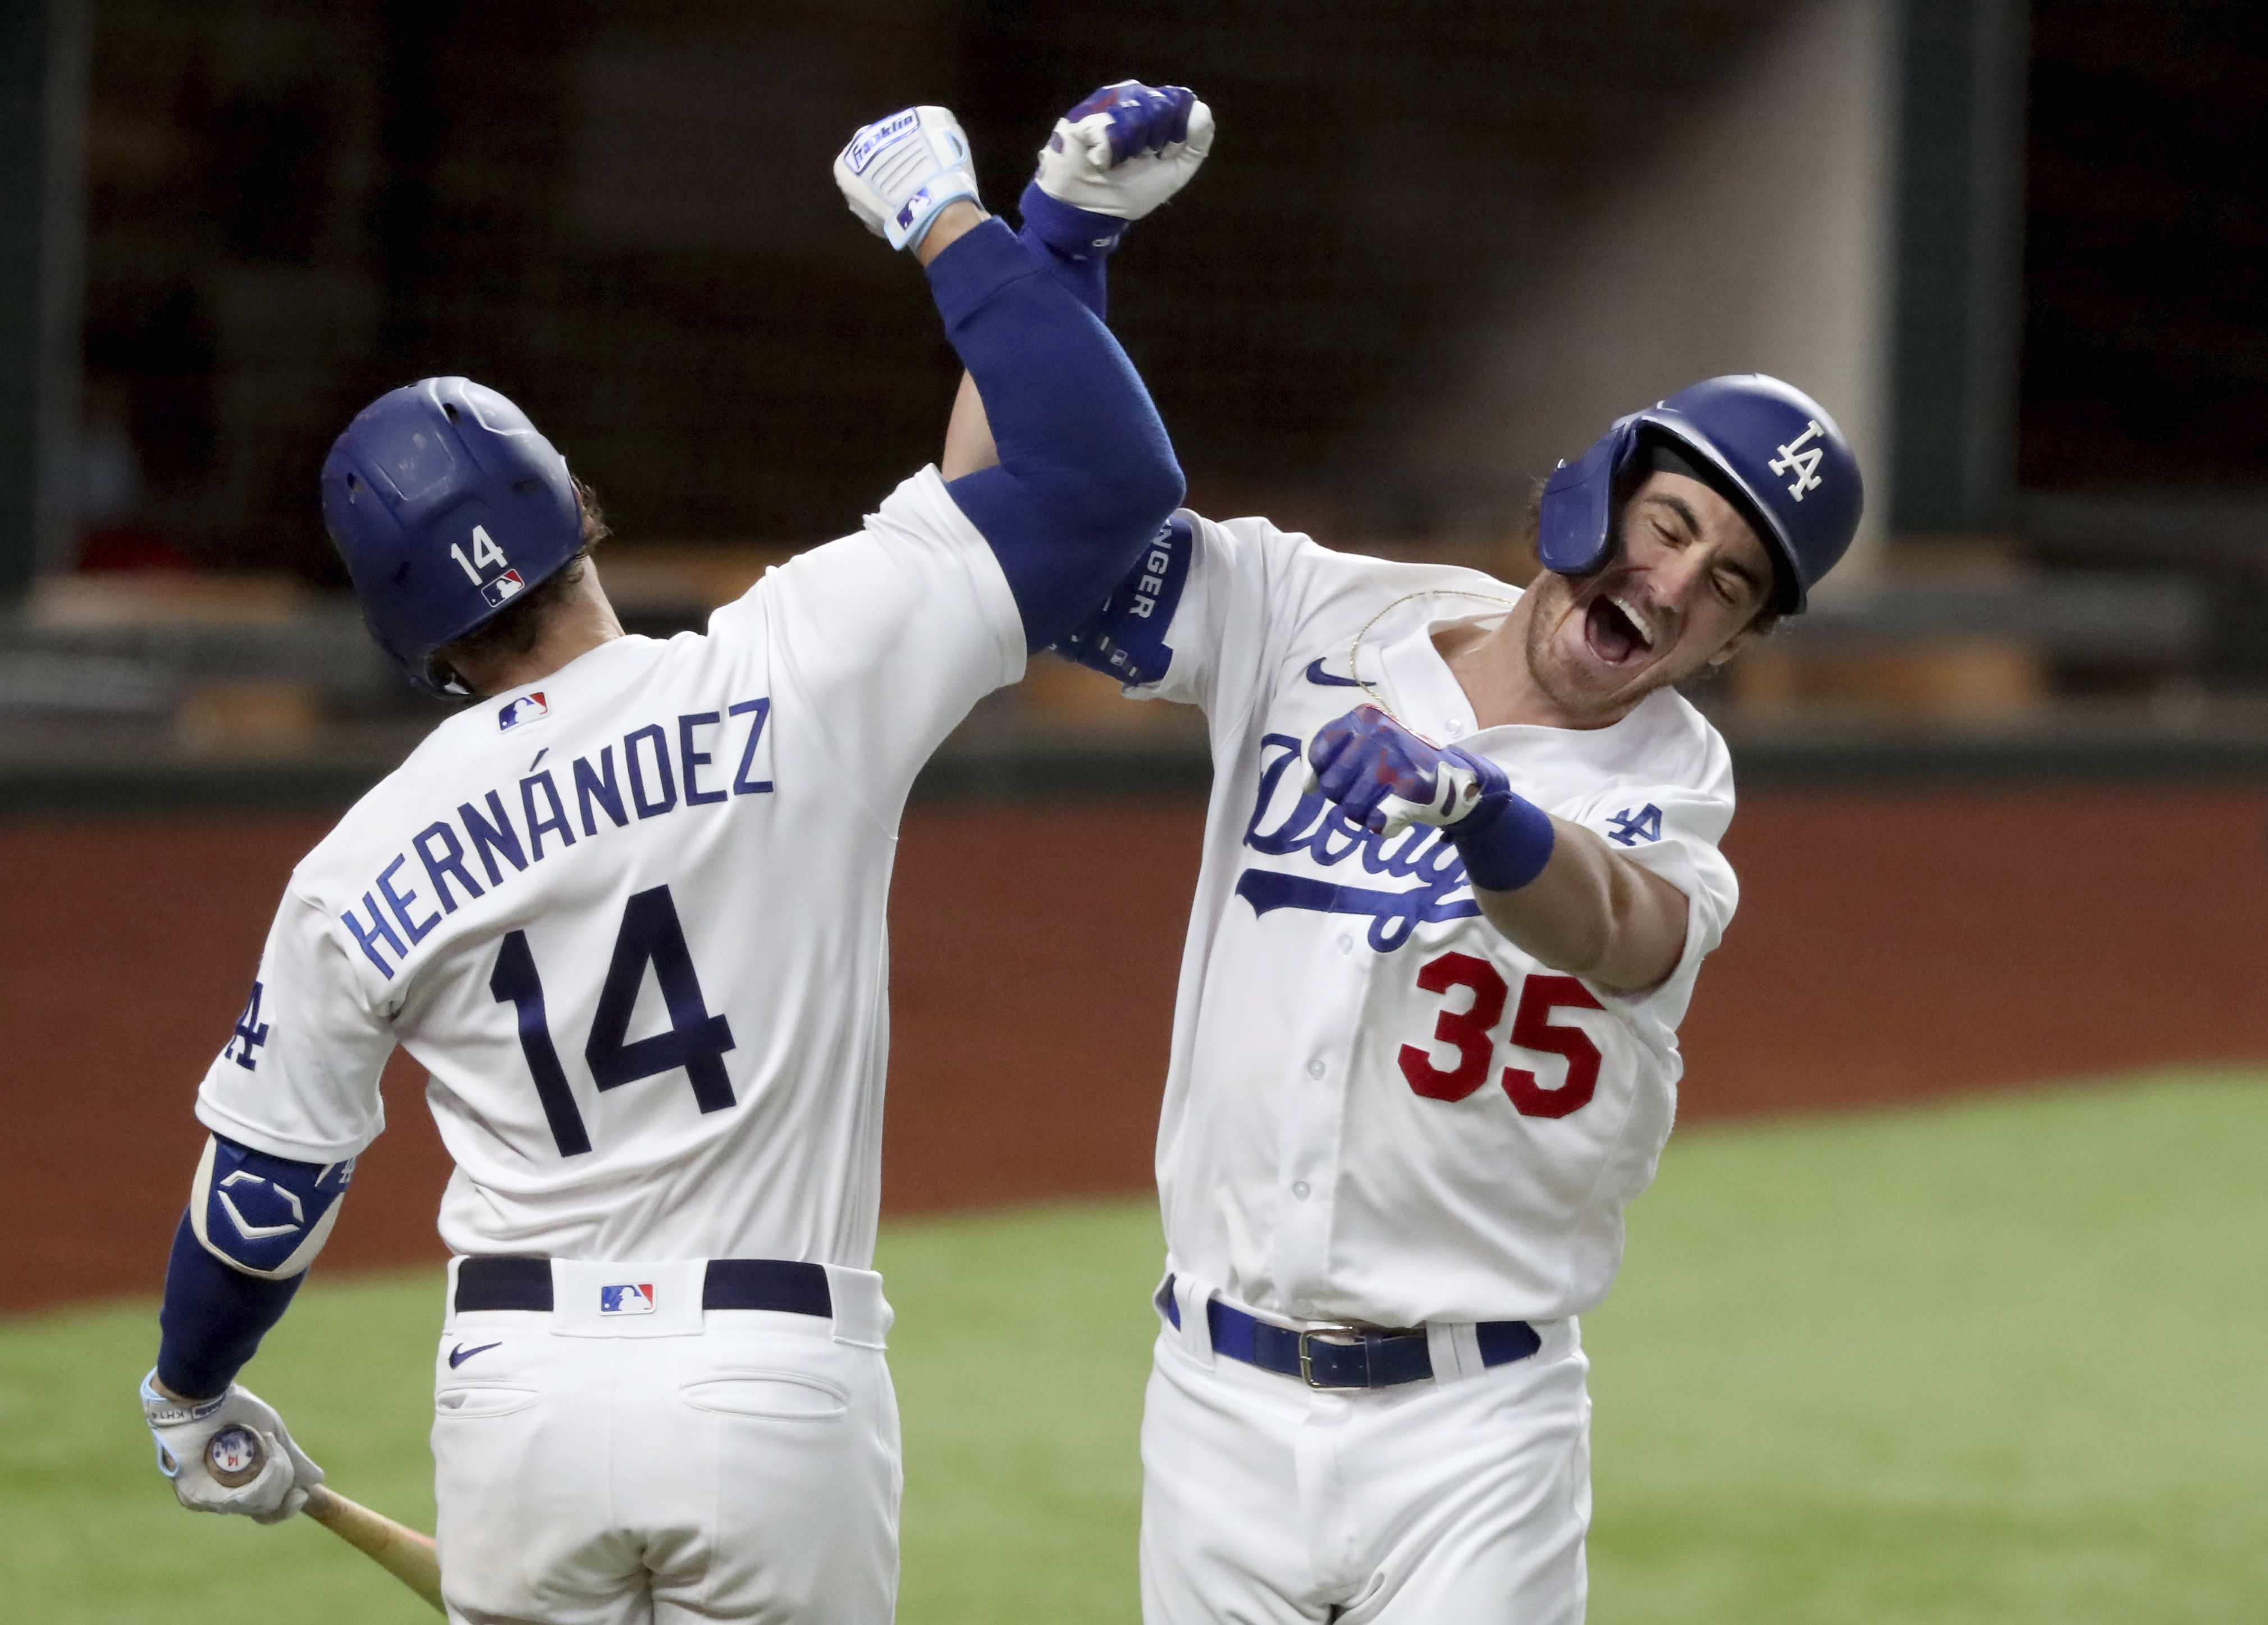 Enrique Hernandez's response after Dodgers World Series ring ceremony